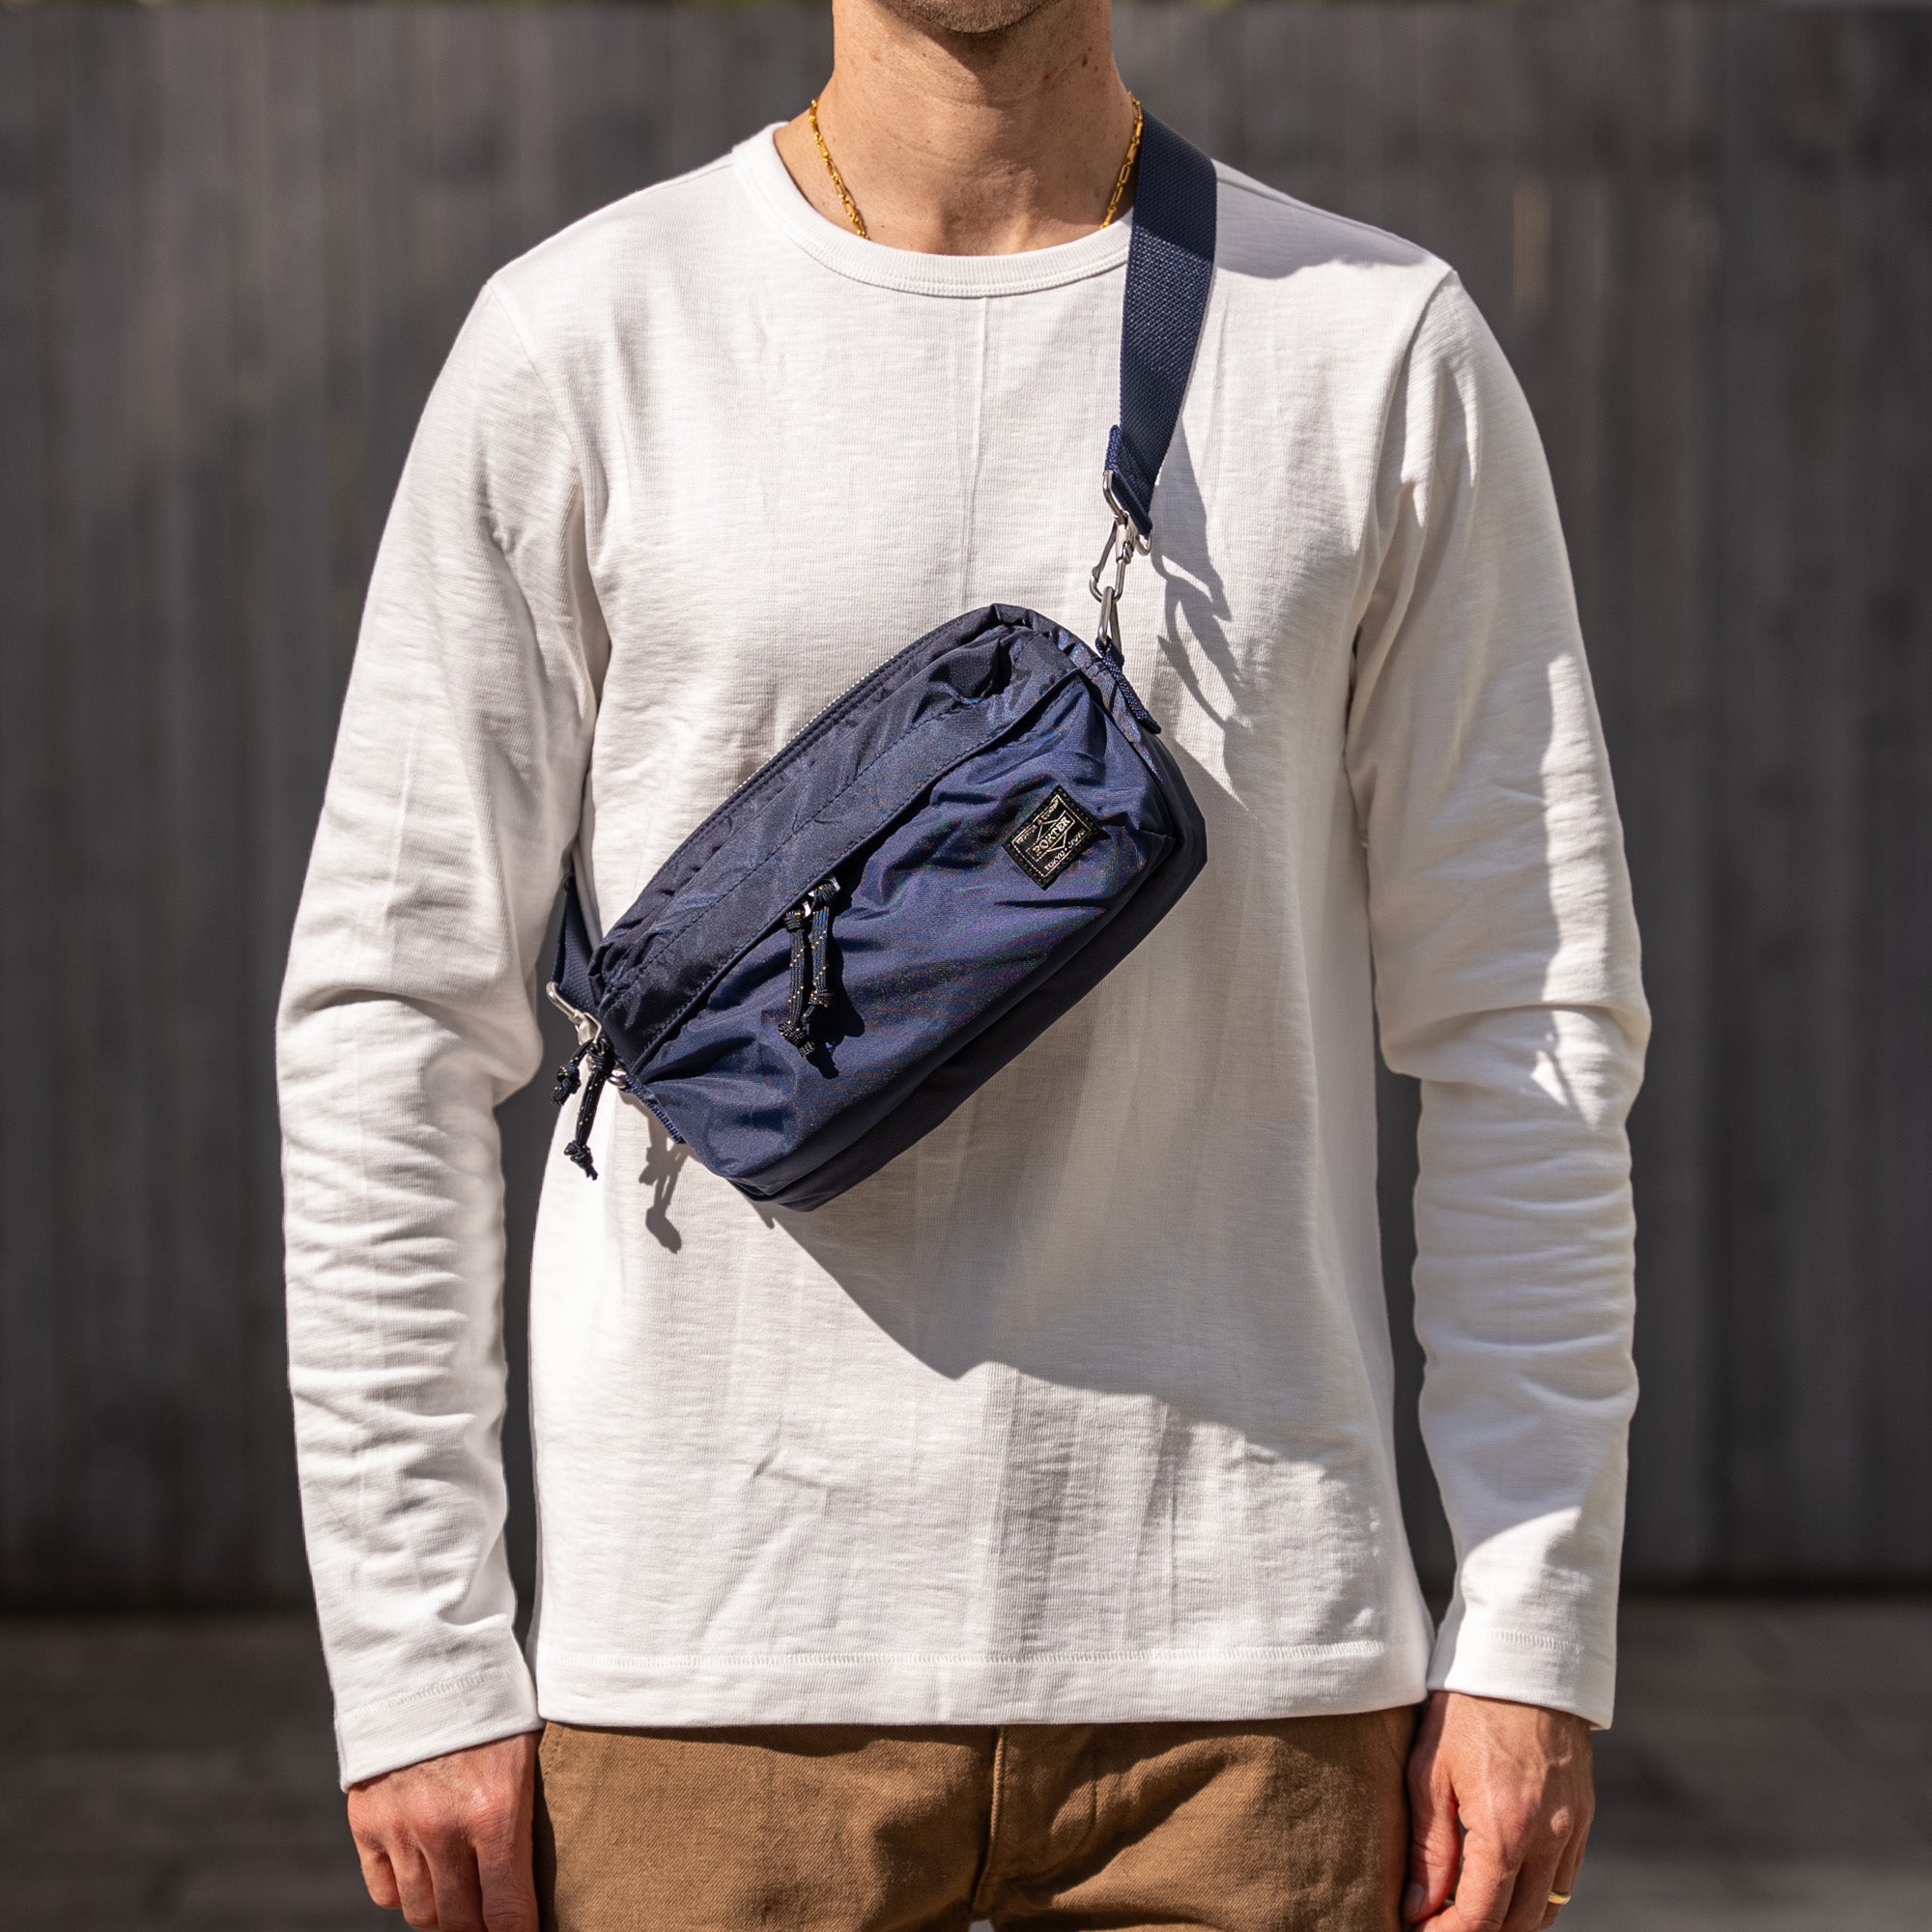 Yoshida Porter Tanker Waist Bag mini Shoulder bag Black men and women | eBay